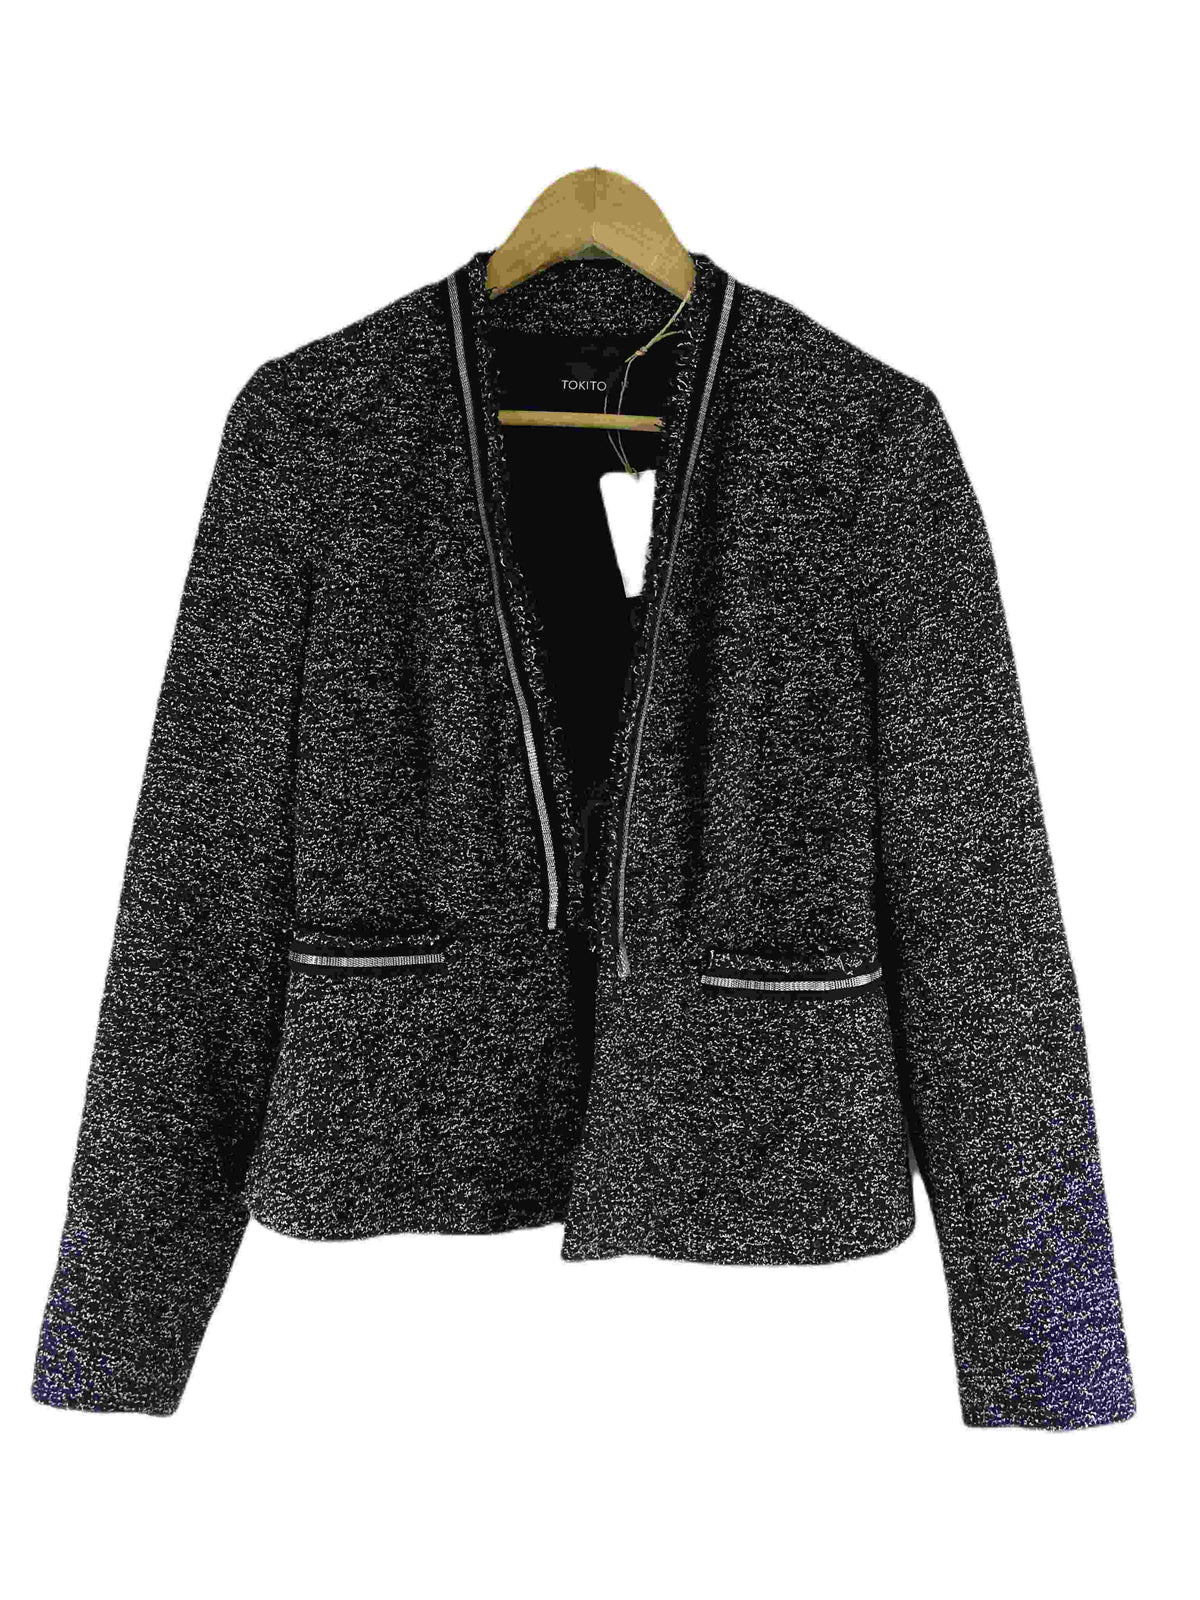 Tokito Boucle Tweed Style Jacket 12